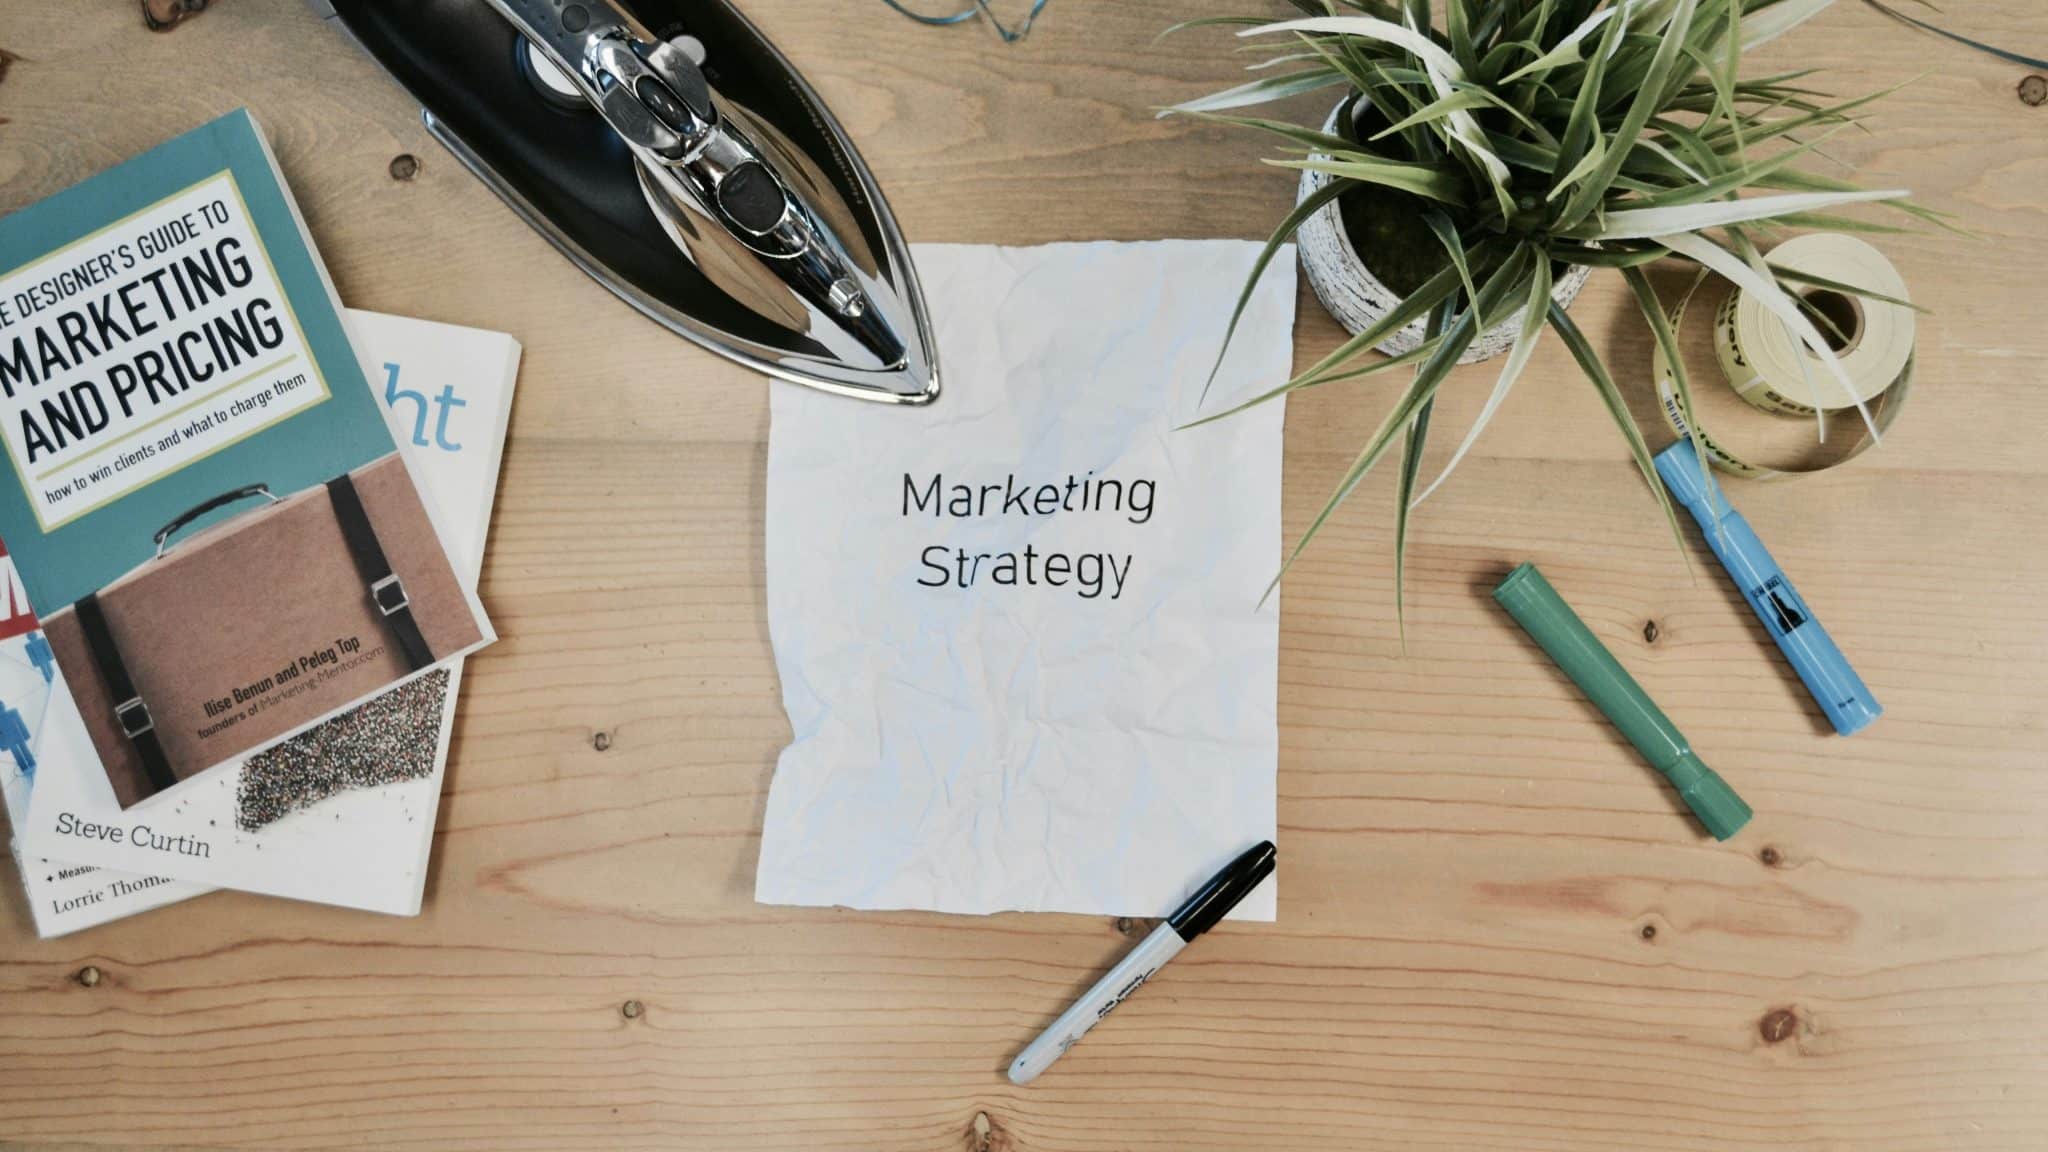 brand marketing versus performance marketing in marketing strategy